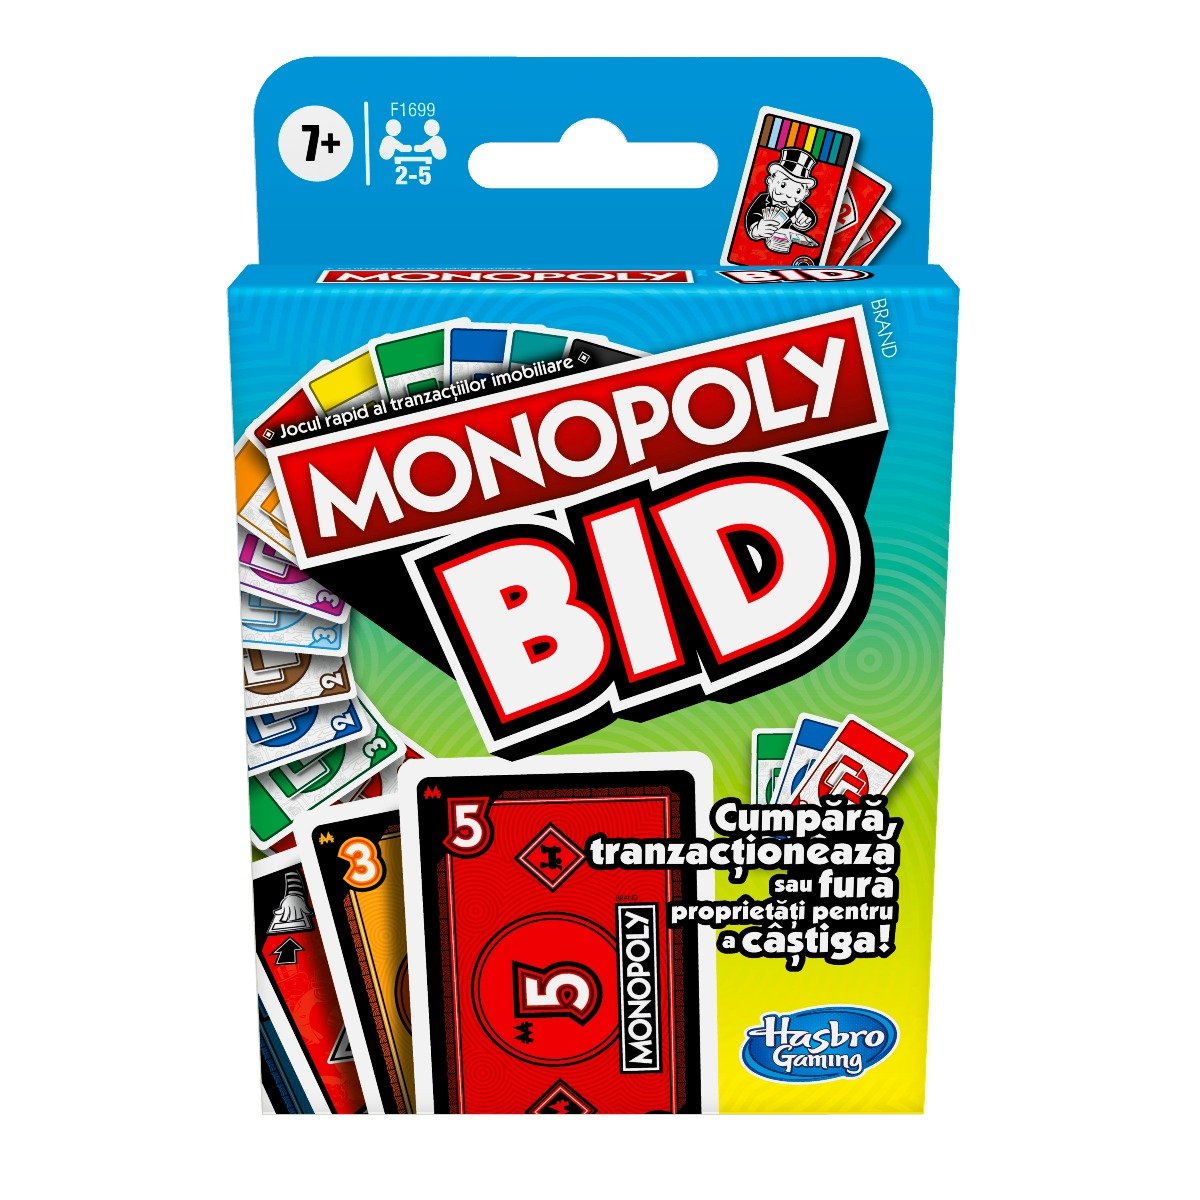 Joc Monopoly Bid Bid